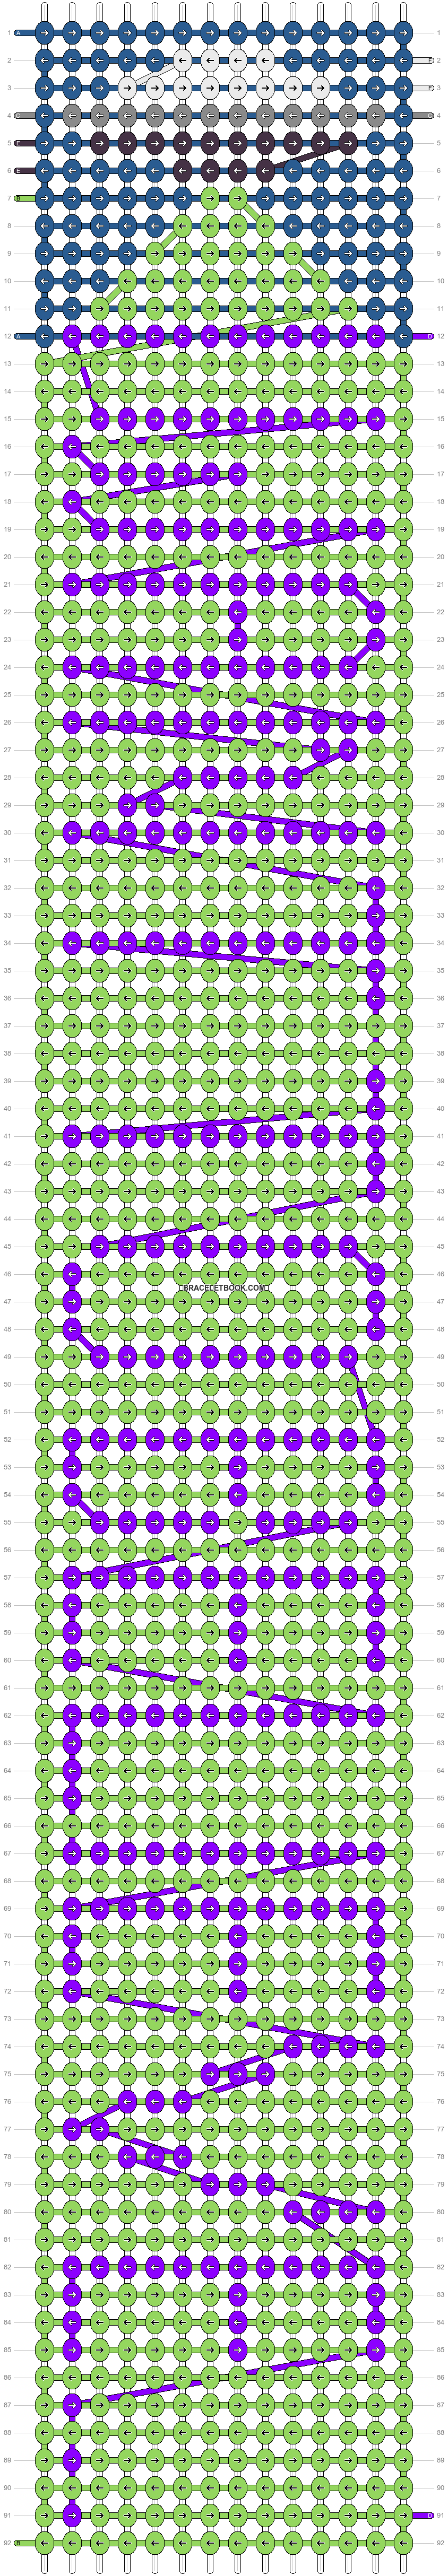 Alpha pattern #13752 variation #85524 pattern